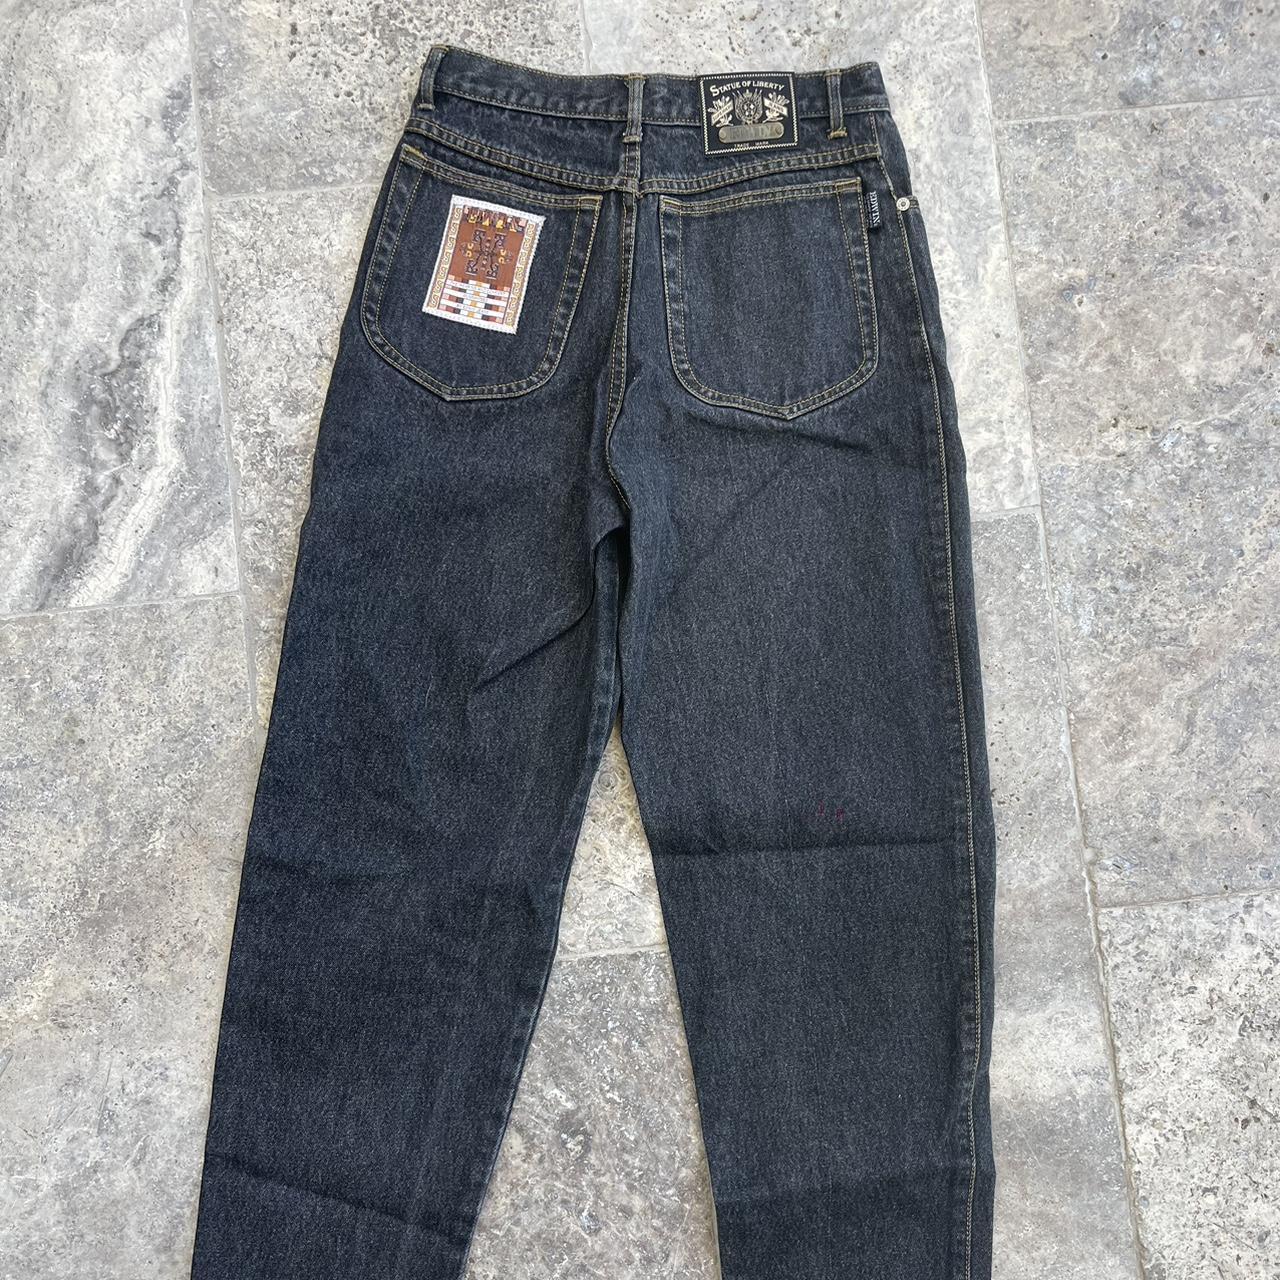 Vintage women’s high wasted jeans 30 inch waist - Depop